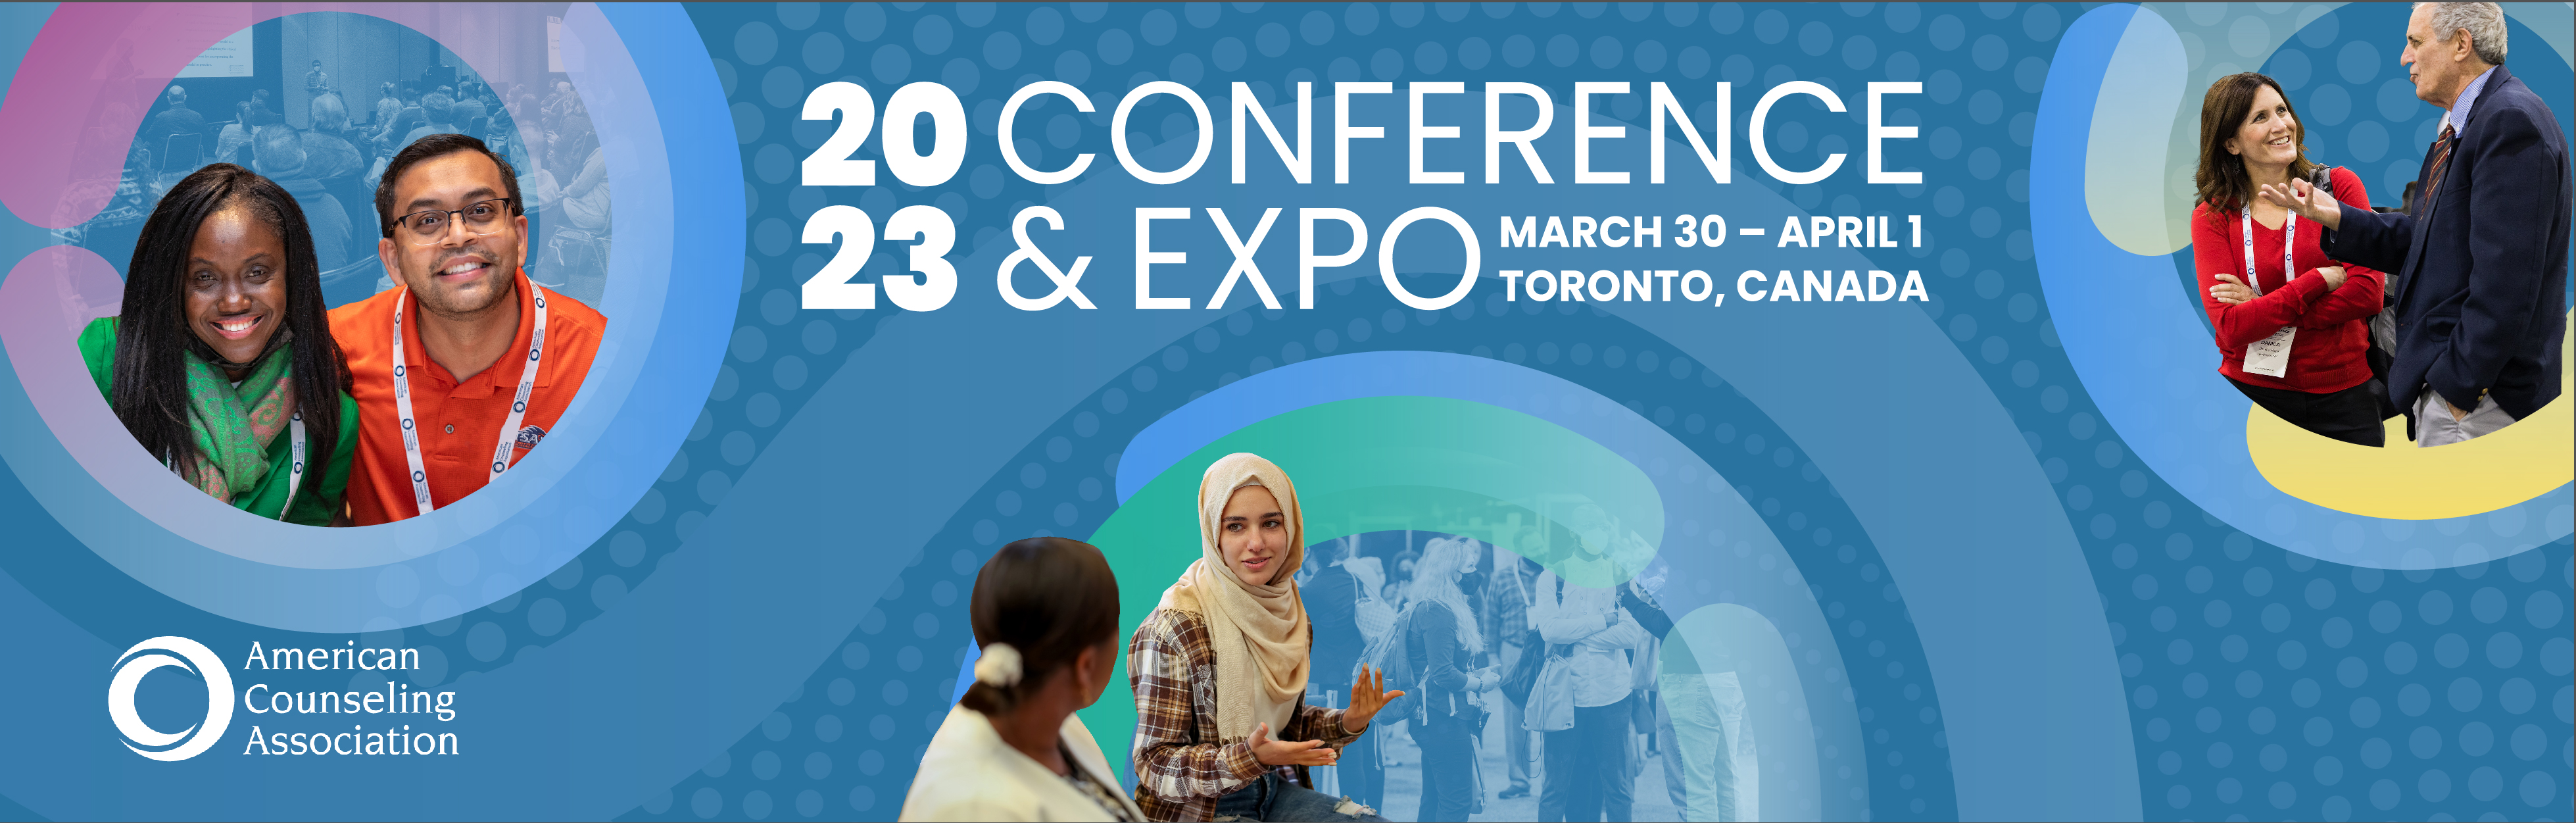 Toronto 2023 Conference